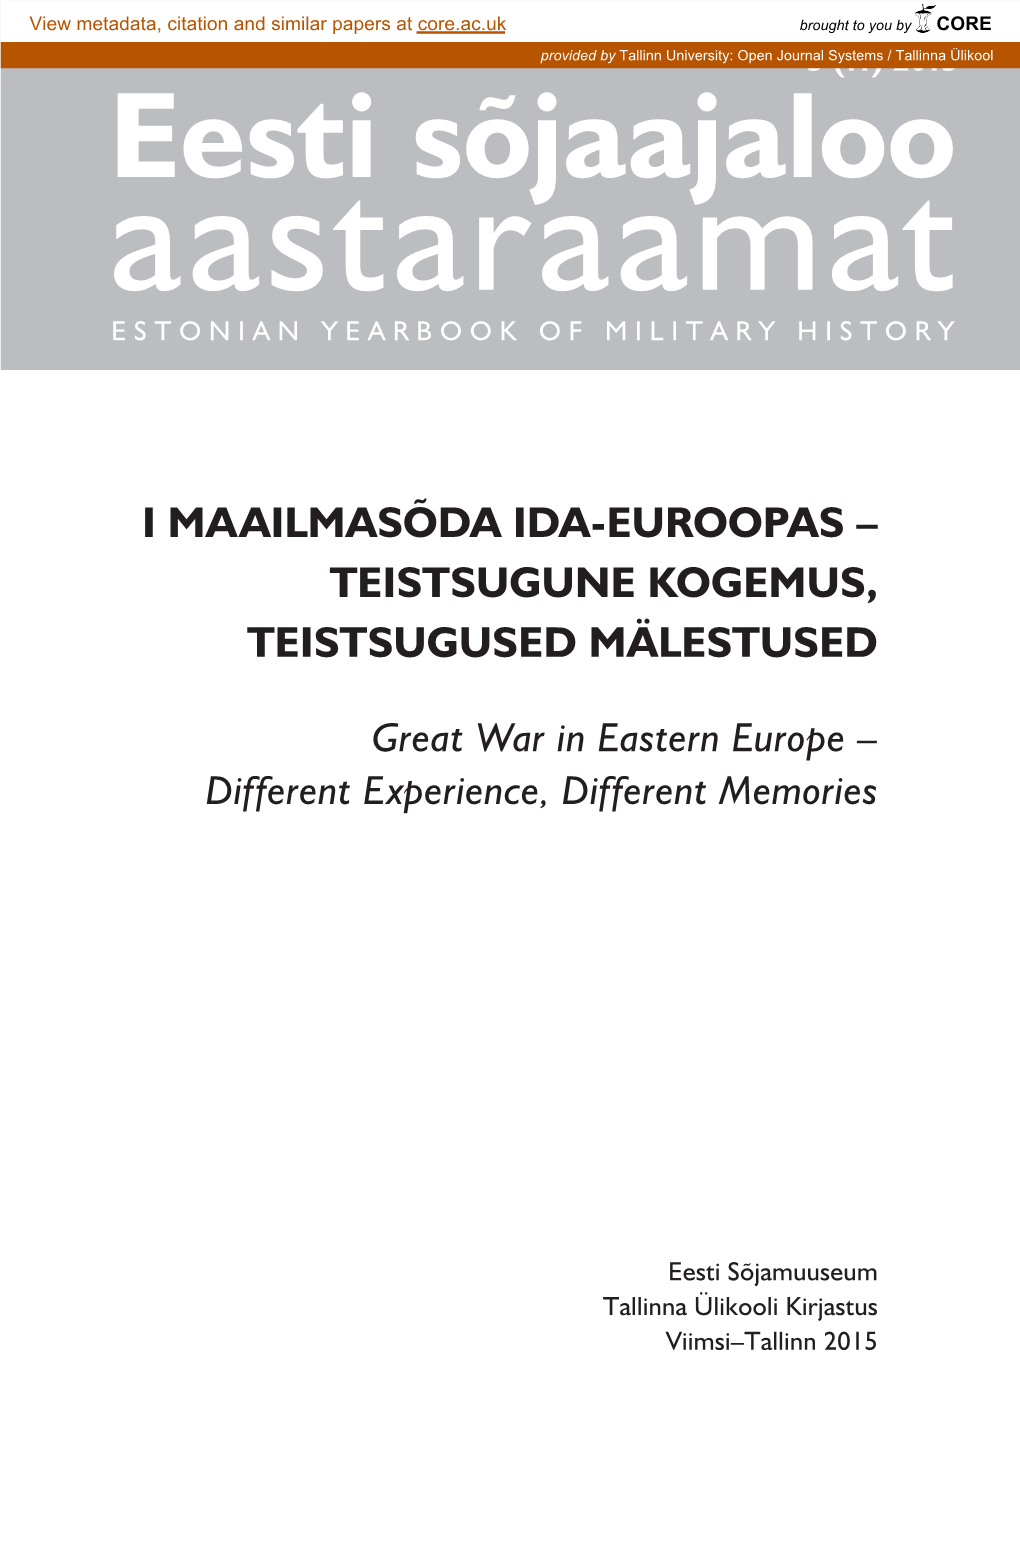 Eesti Sõjaajaloo Aastaraamat Estonian Yearbook of Military History